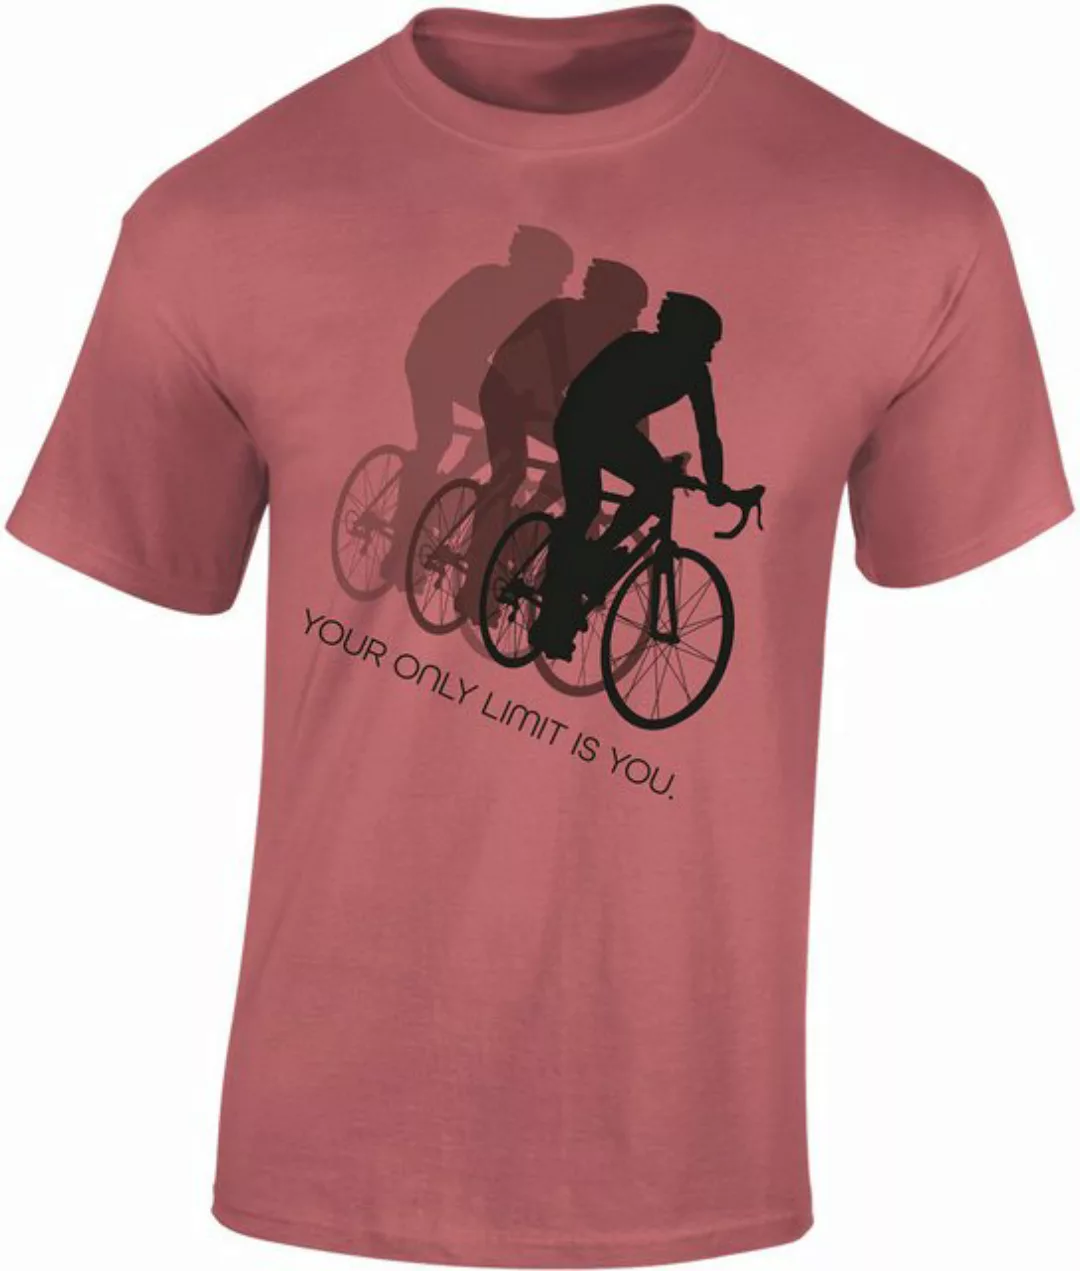 Baddery Print-Shirt Fahrrad T-Shirt: "Your only limit is you" hochwertiger günstig online kaufen